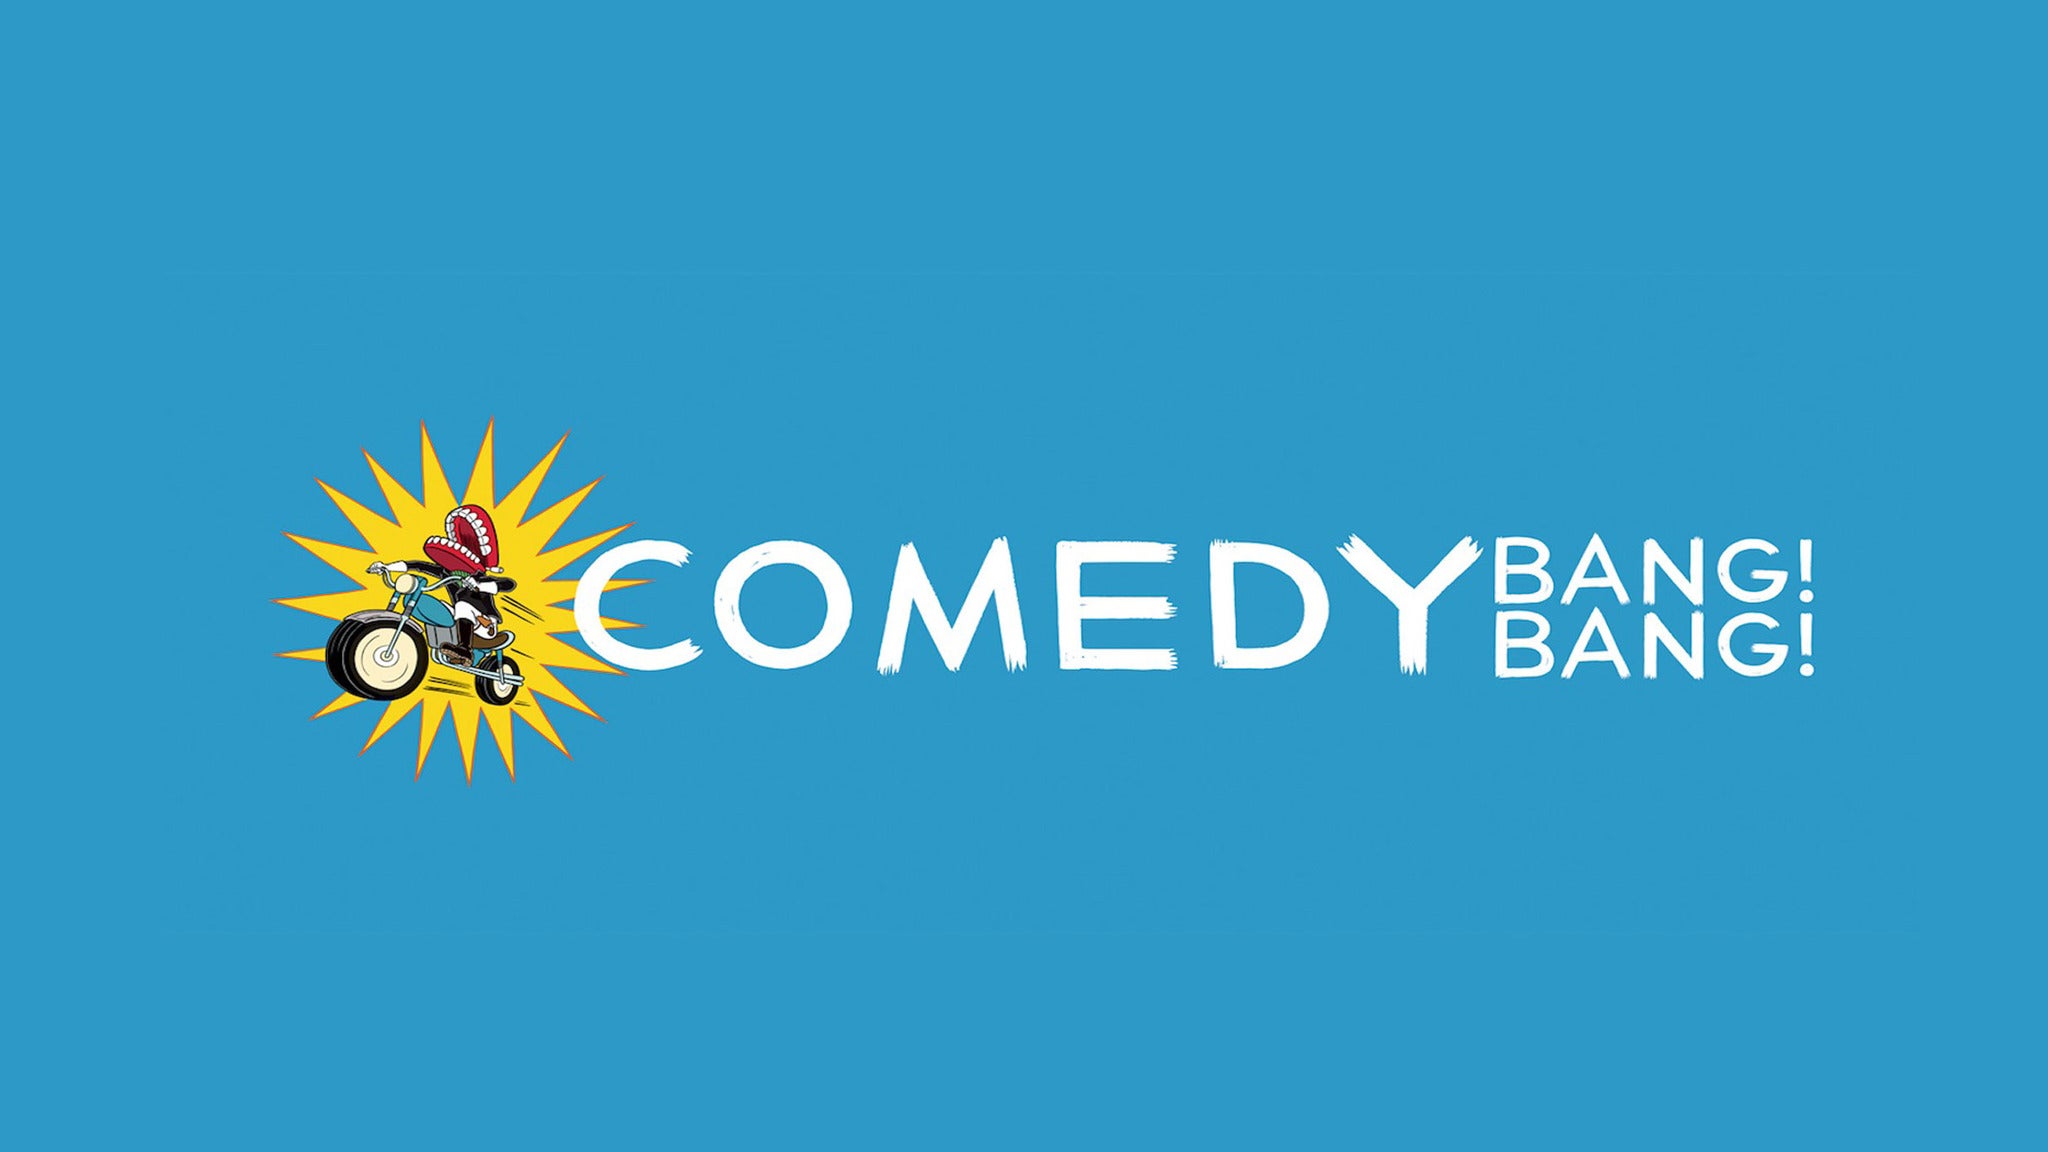 Comedy Bang! Bang! Live! Starring Scott Aukerman w/ guests in Washington promo photo for Live Nation Mobile App presale offer code